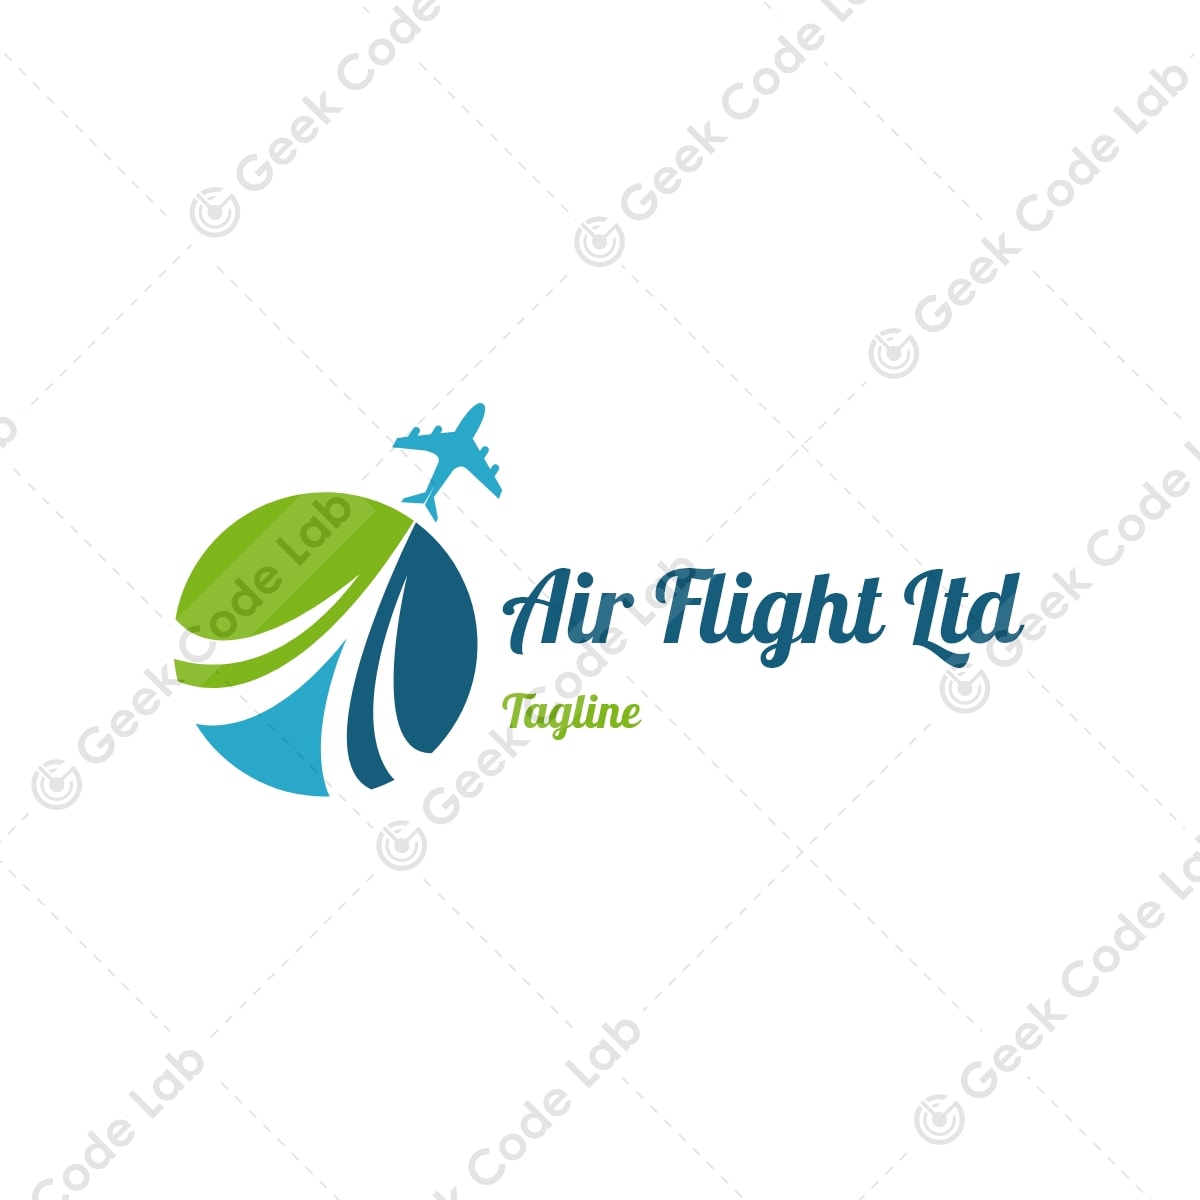 Air Flight Ltd